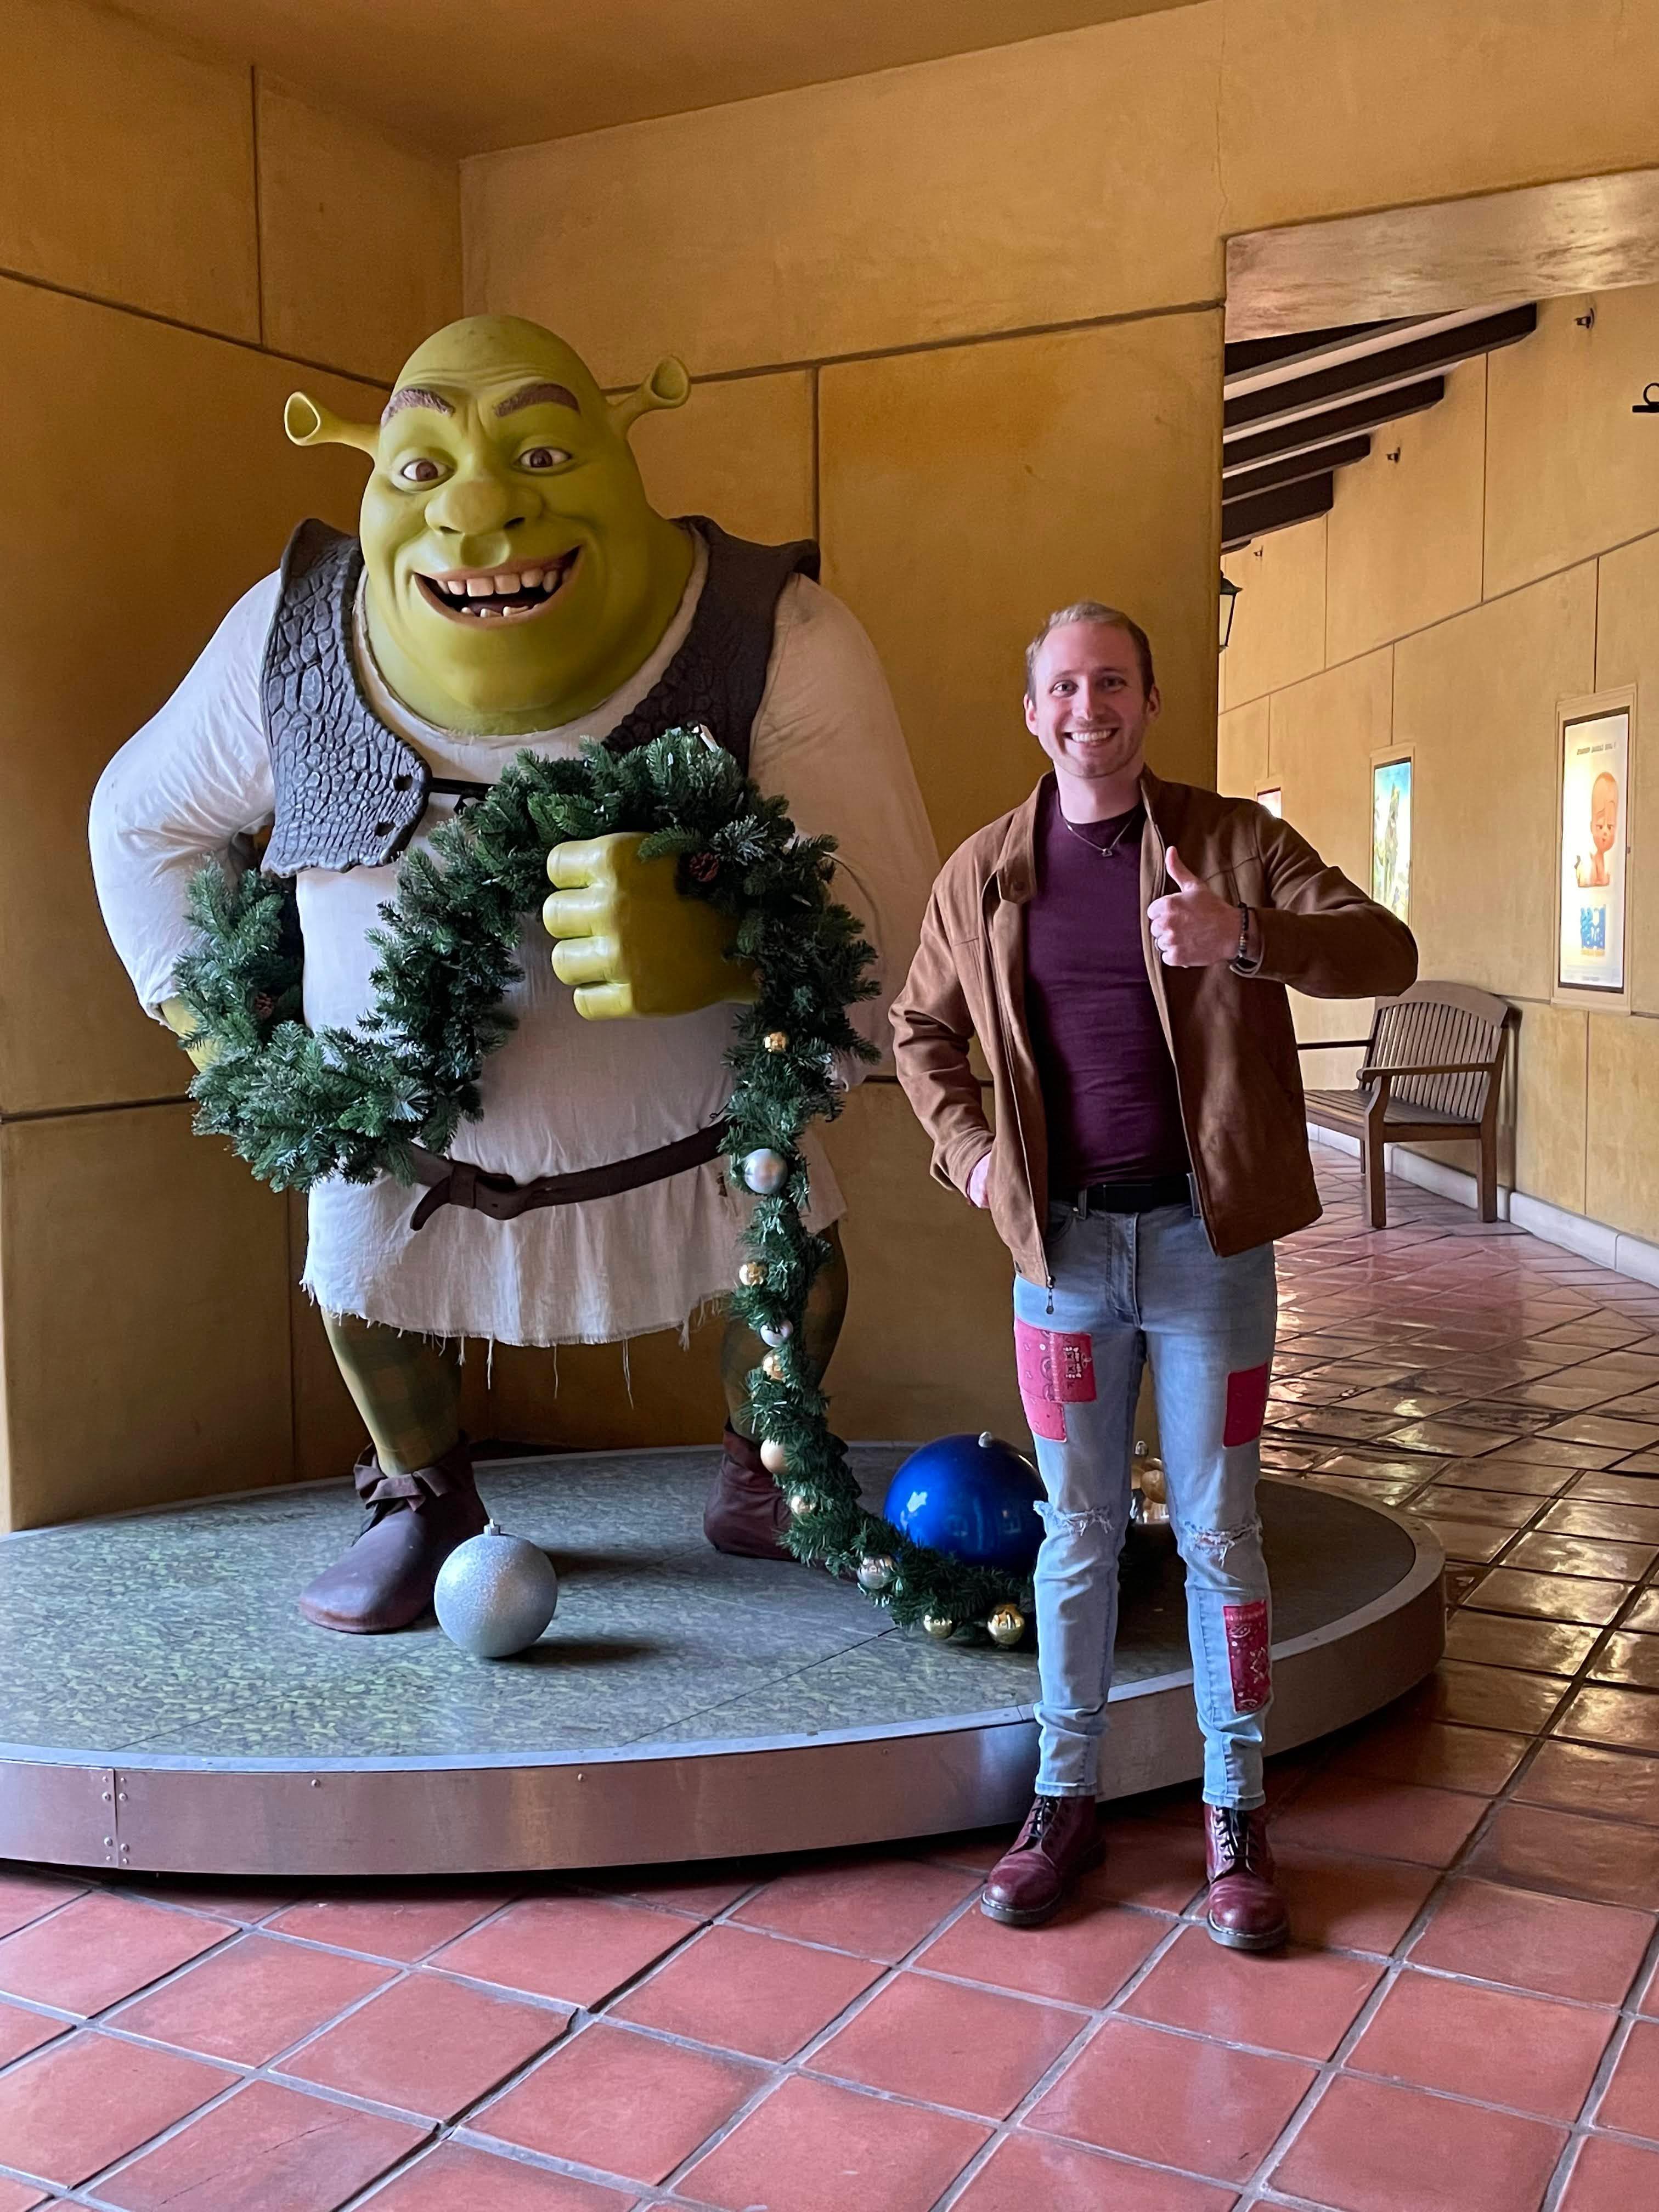 Joey strikes a pose with Shrek at DreamWorks